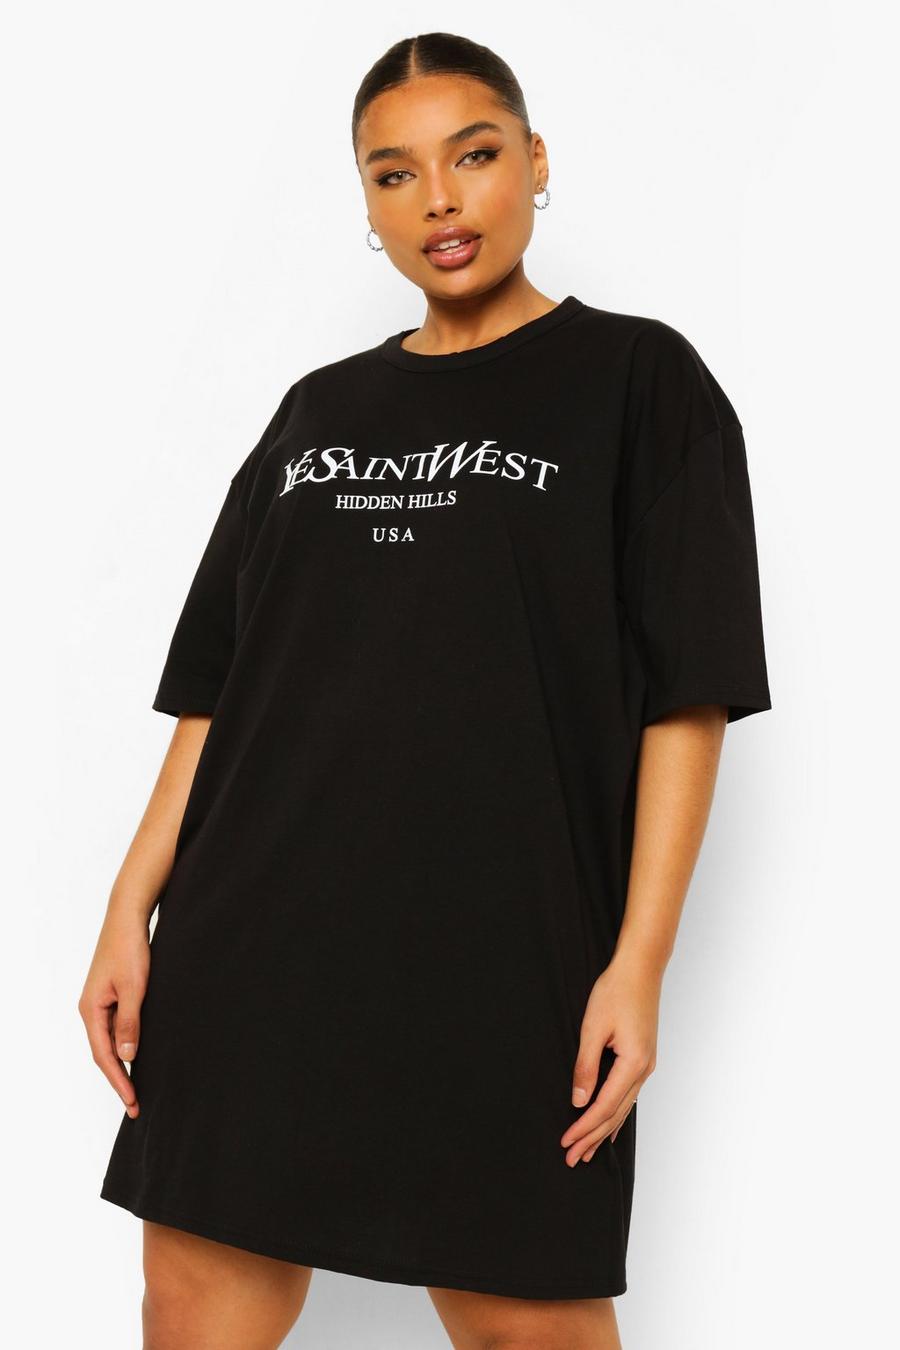 Vestido camiseta Plus de Ye Saint West, Negro image number 1